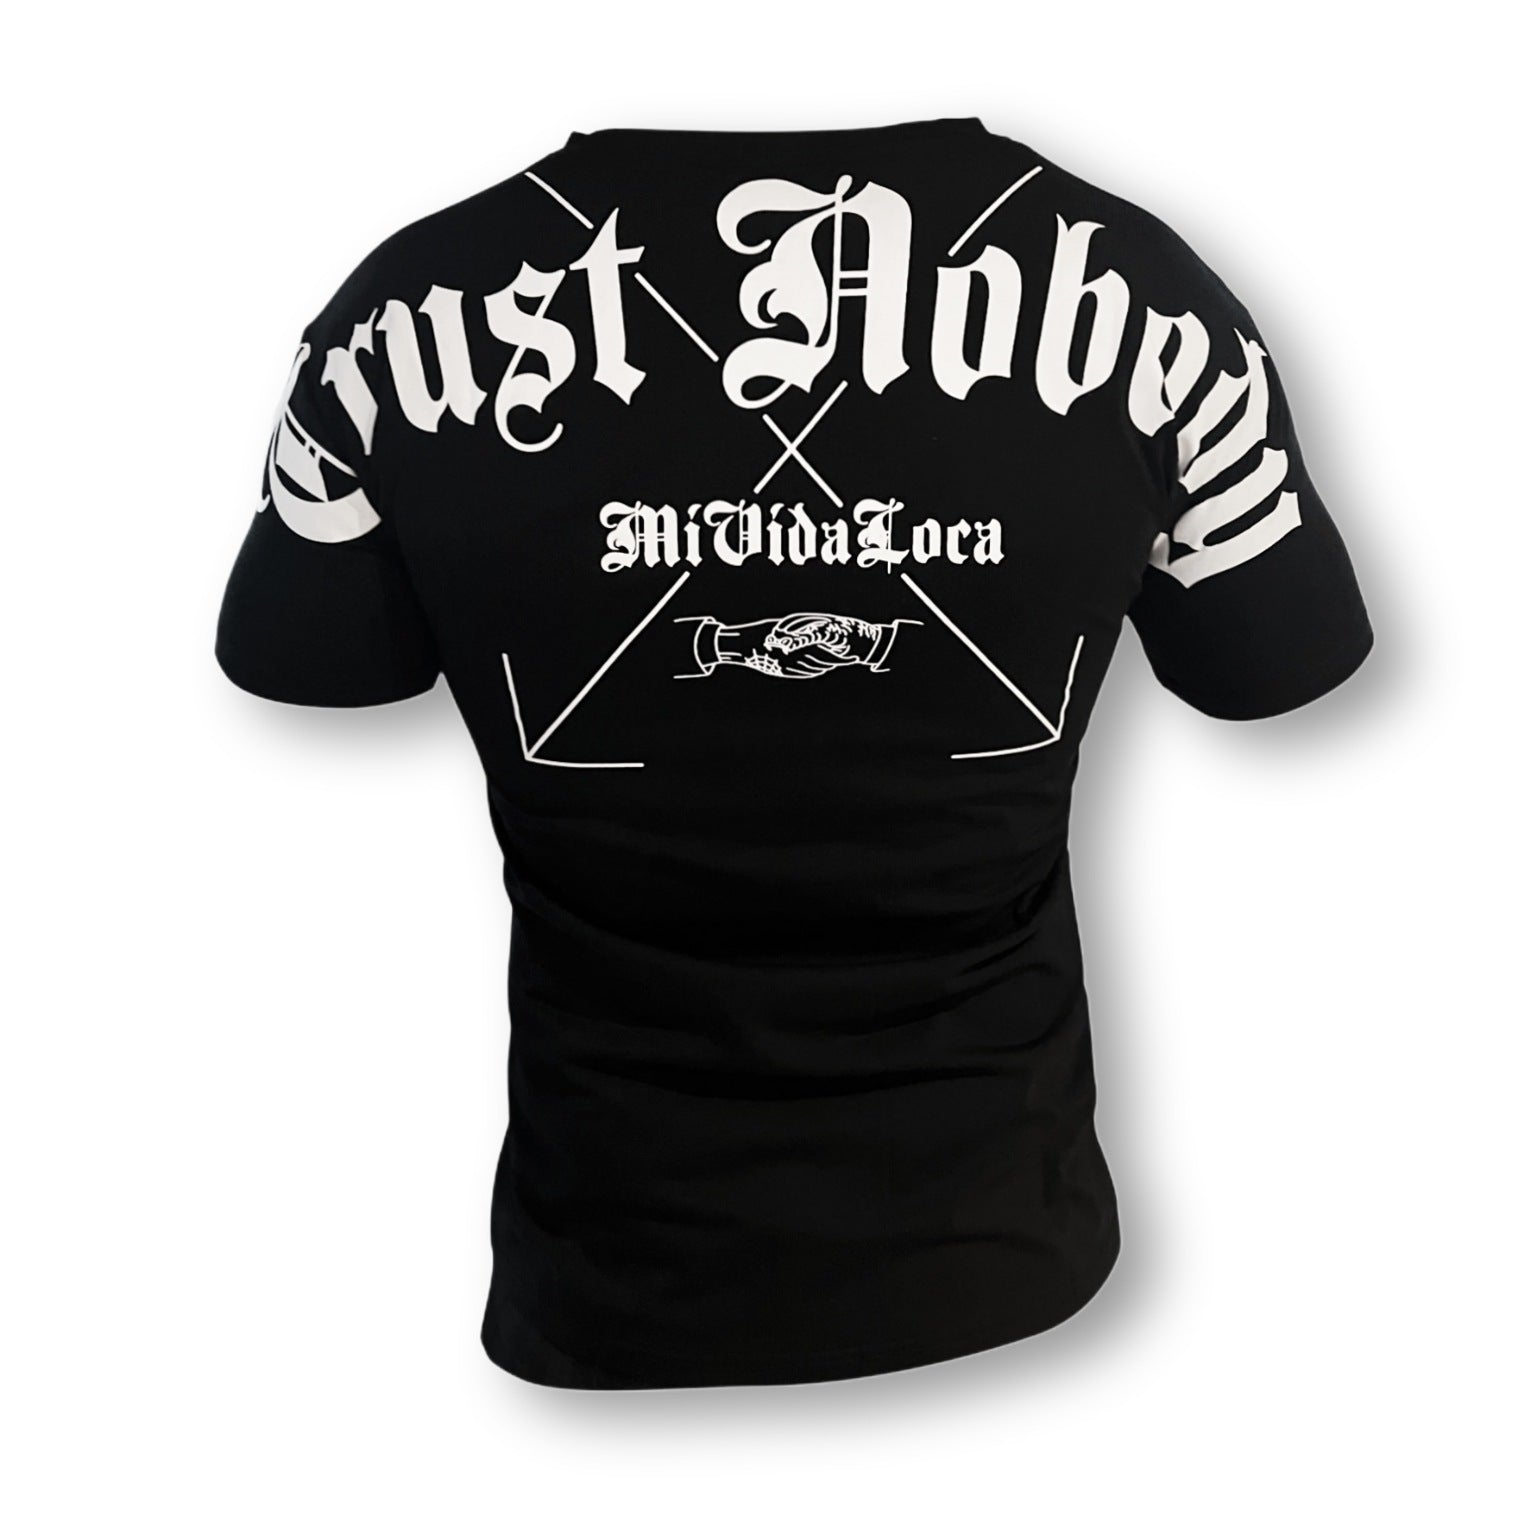 MVL "Trust nobody" T-shirt - black